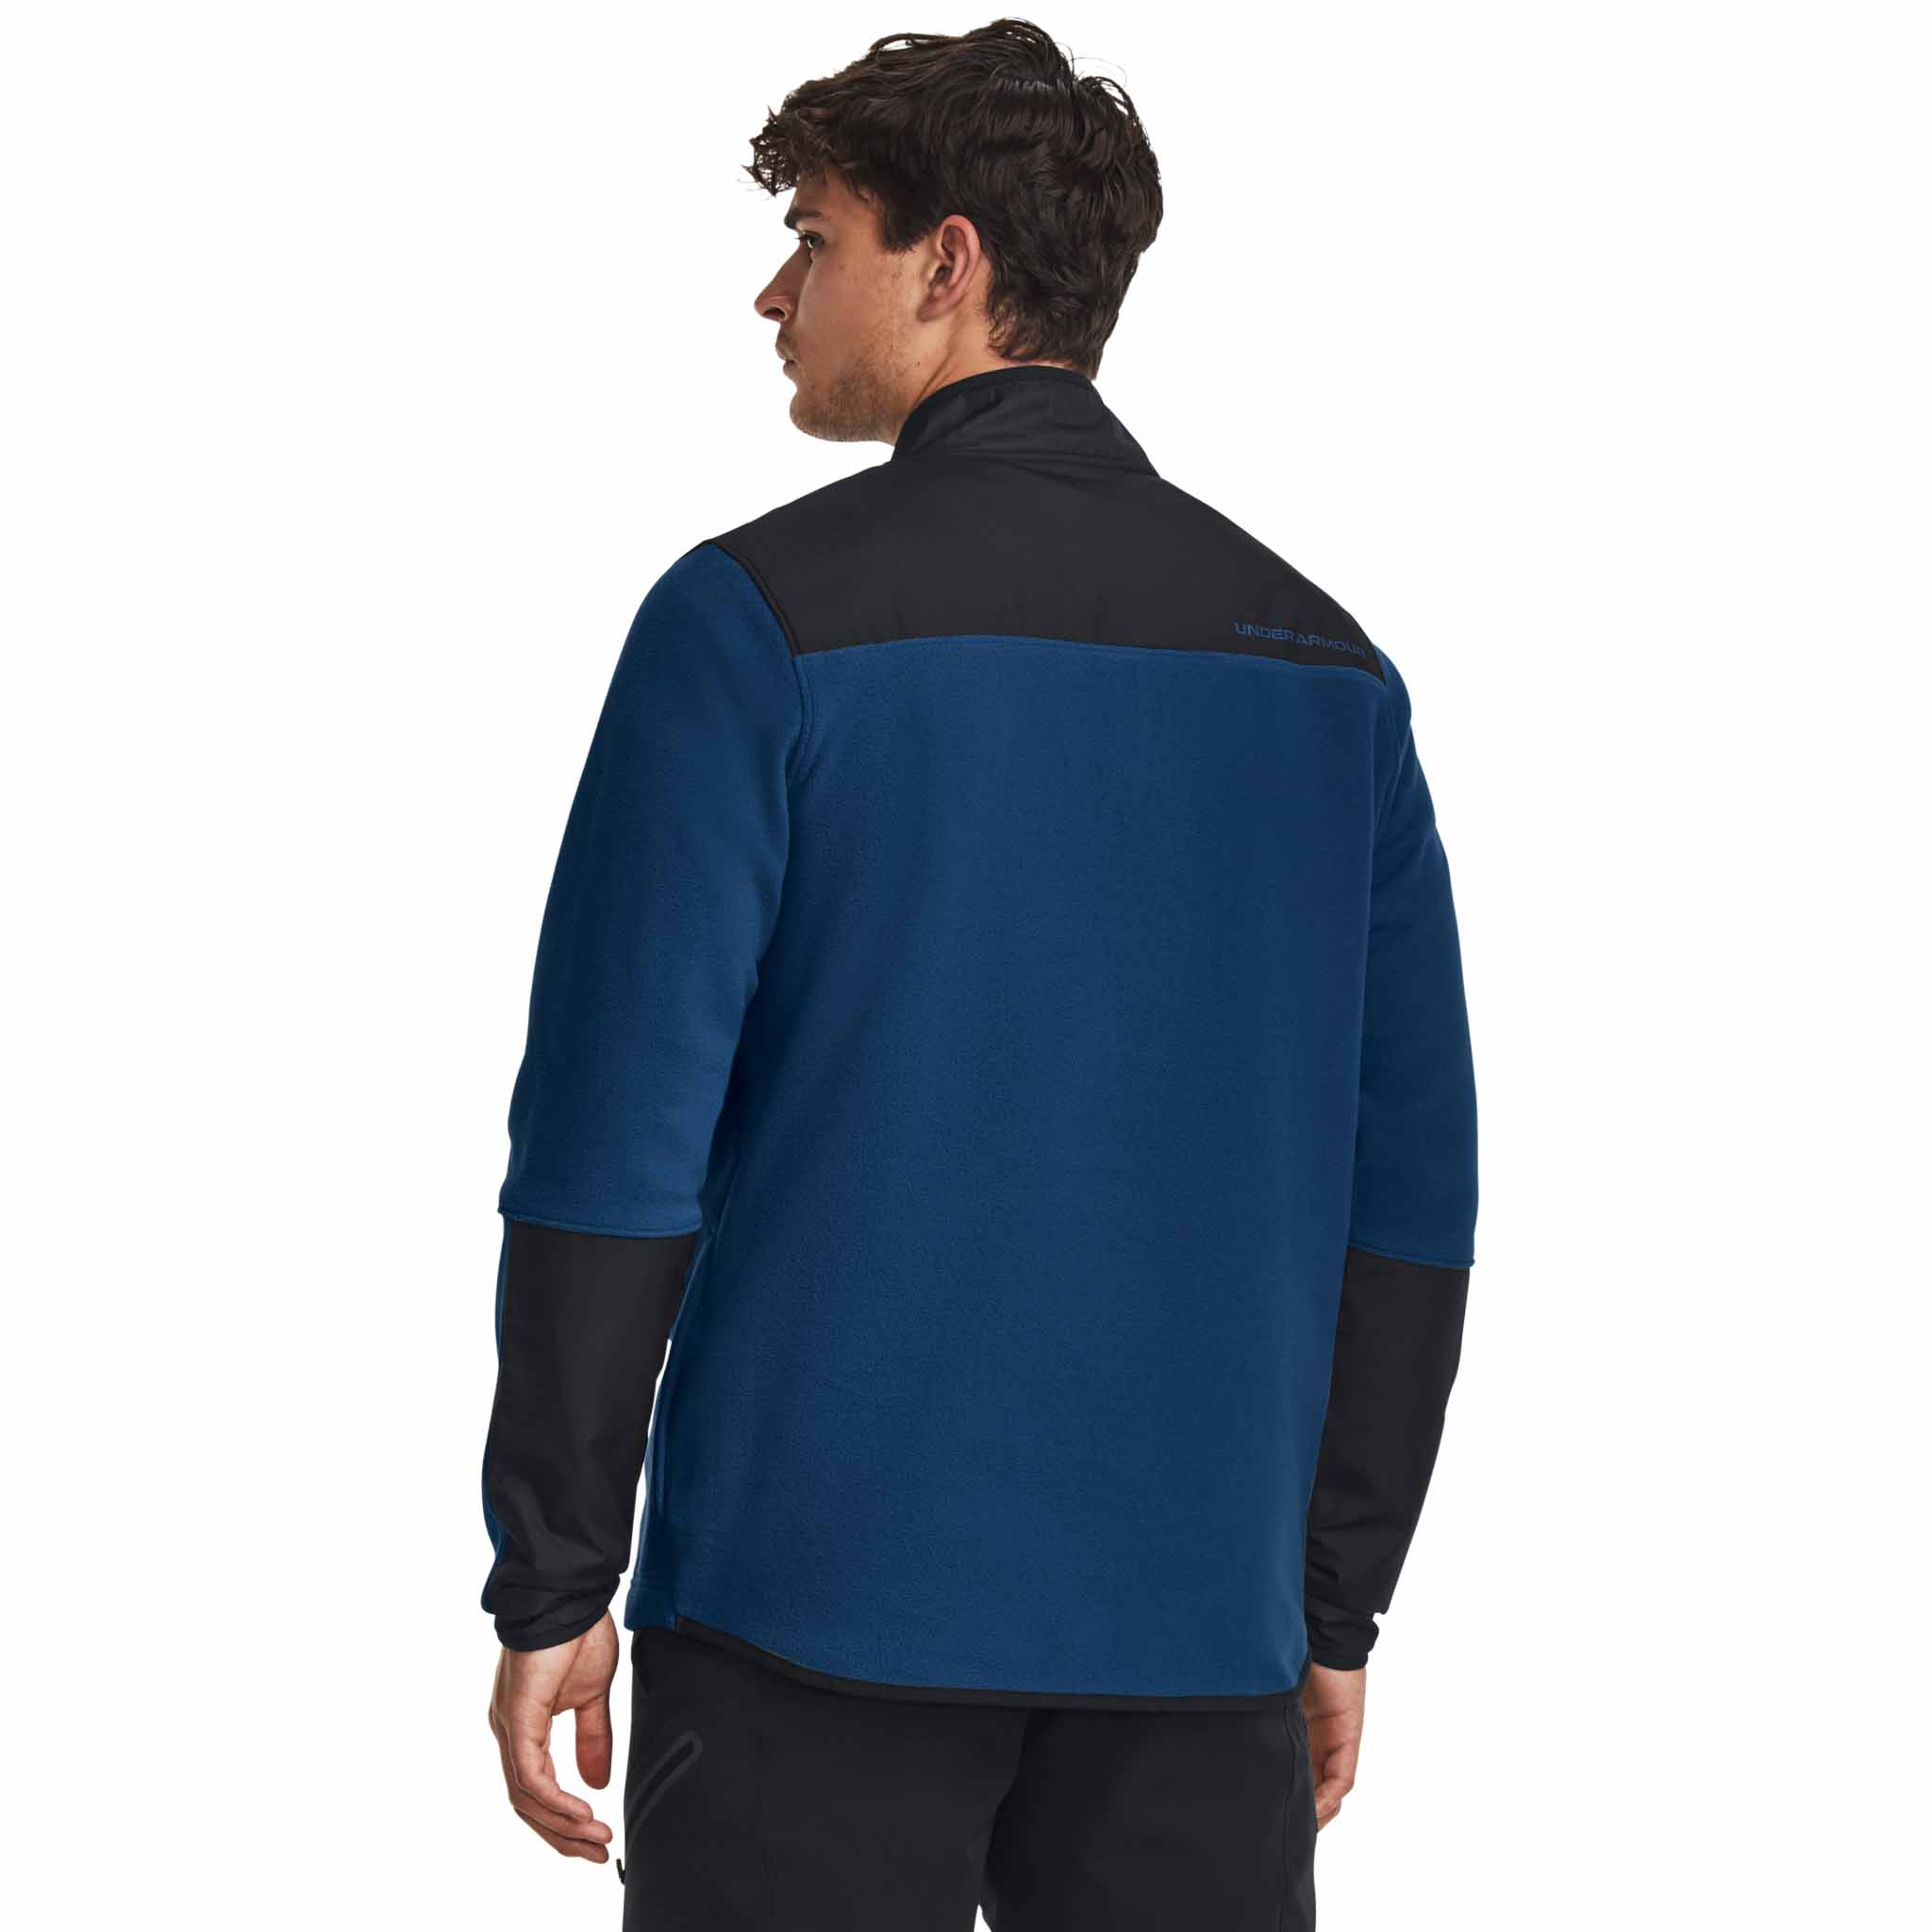 Under Armour Coldgear Infrared Utility Half Zip Jacket in Black for Men